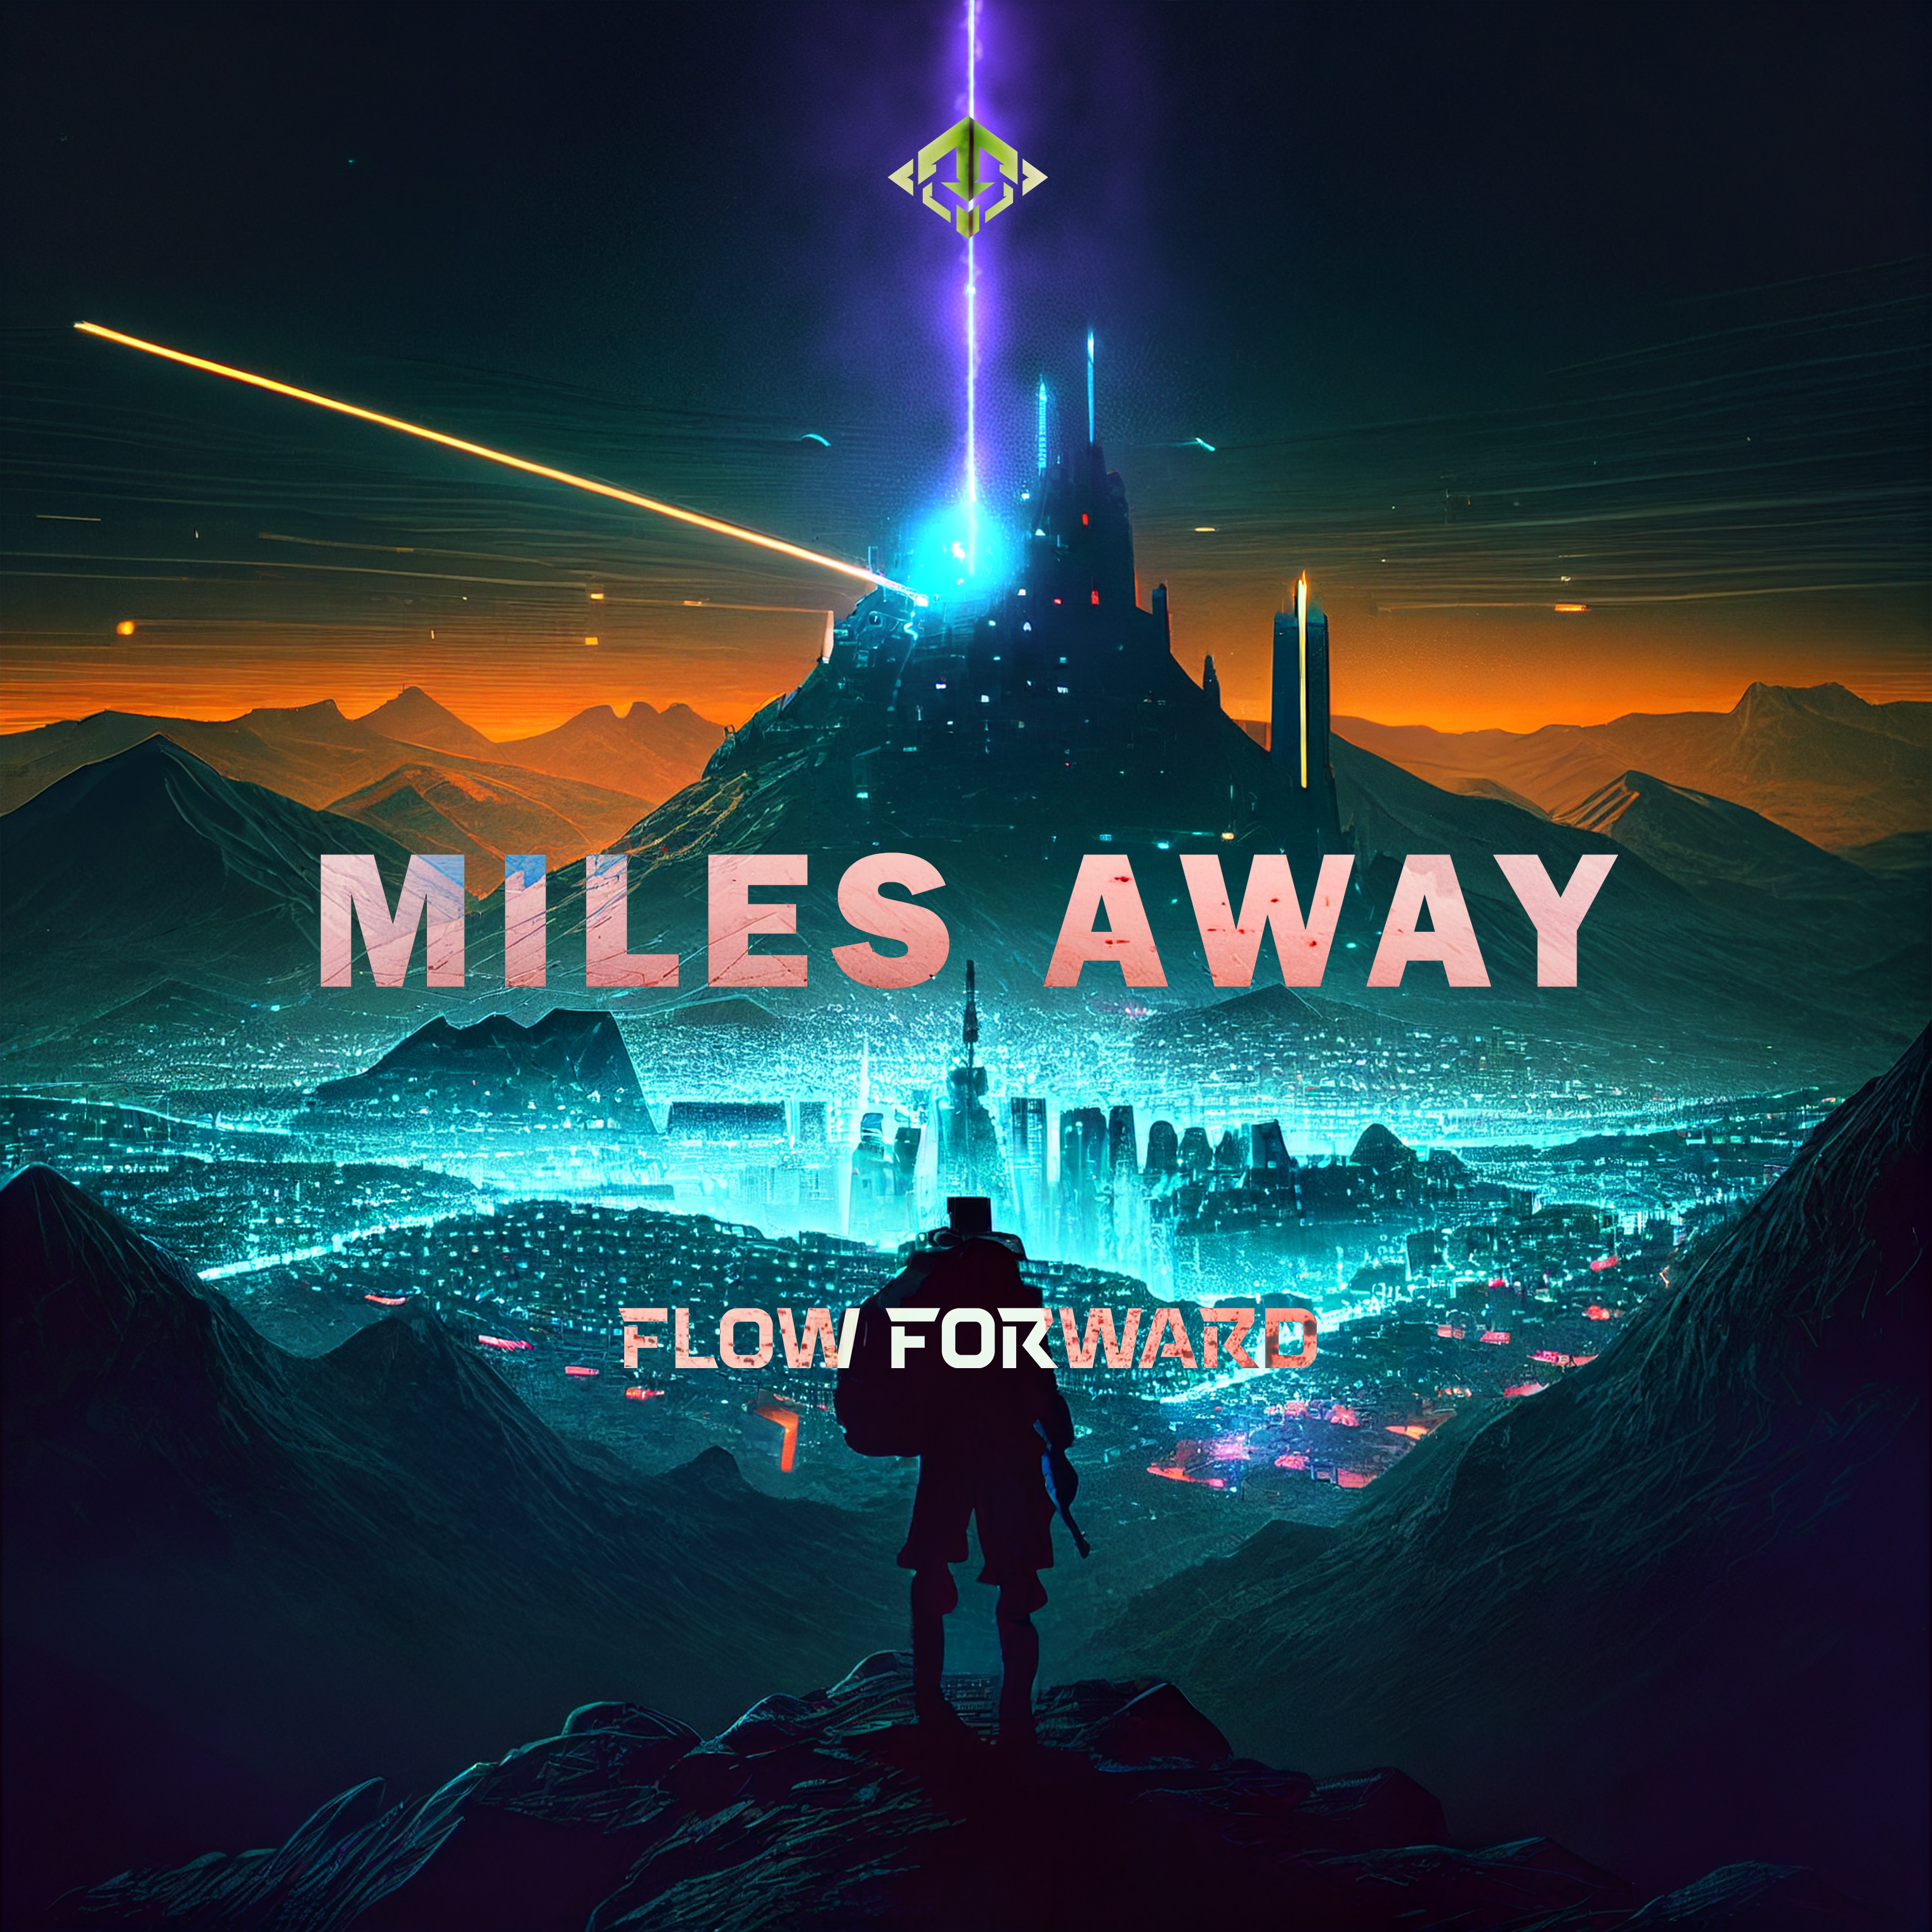 Flow Forward - Miles Away